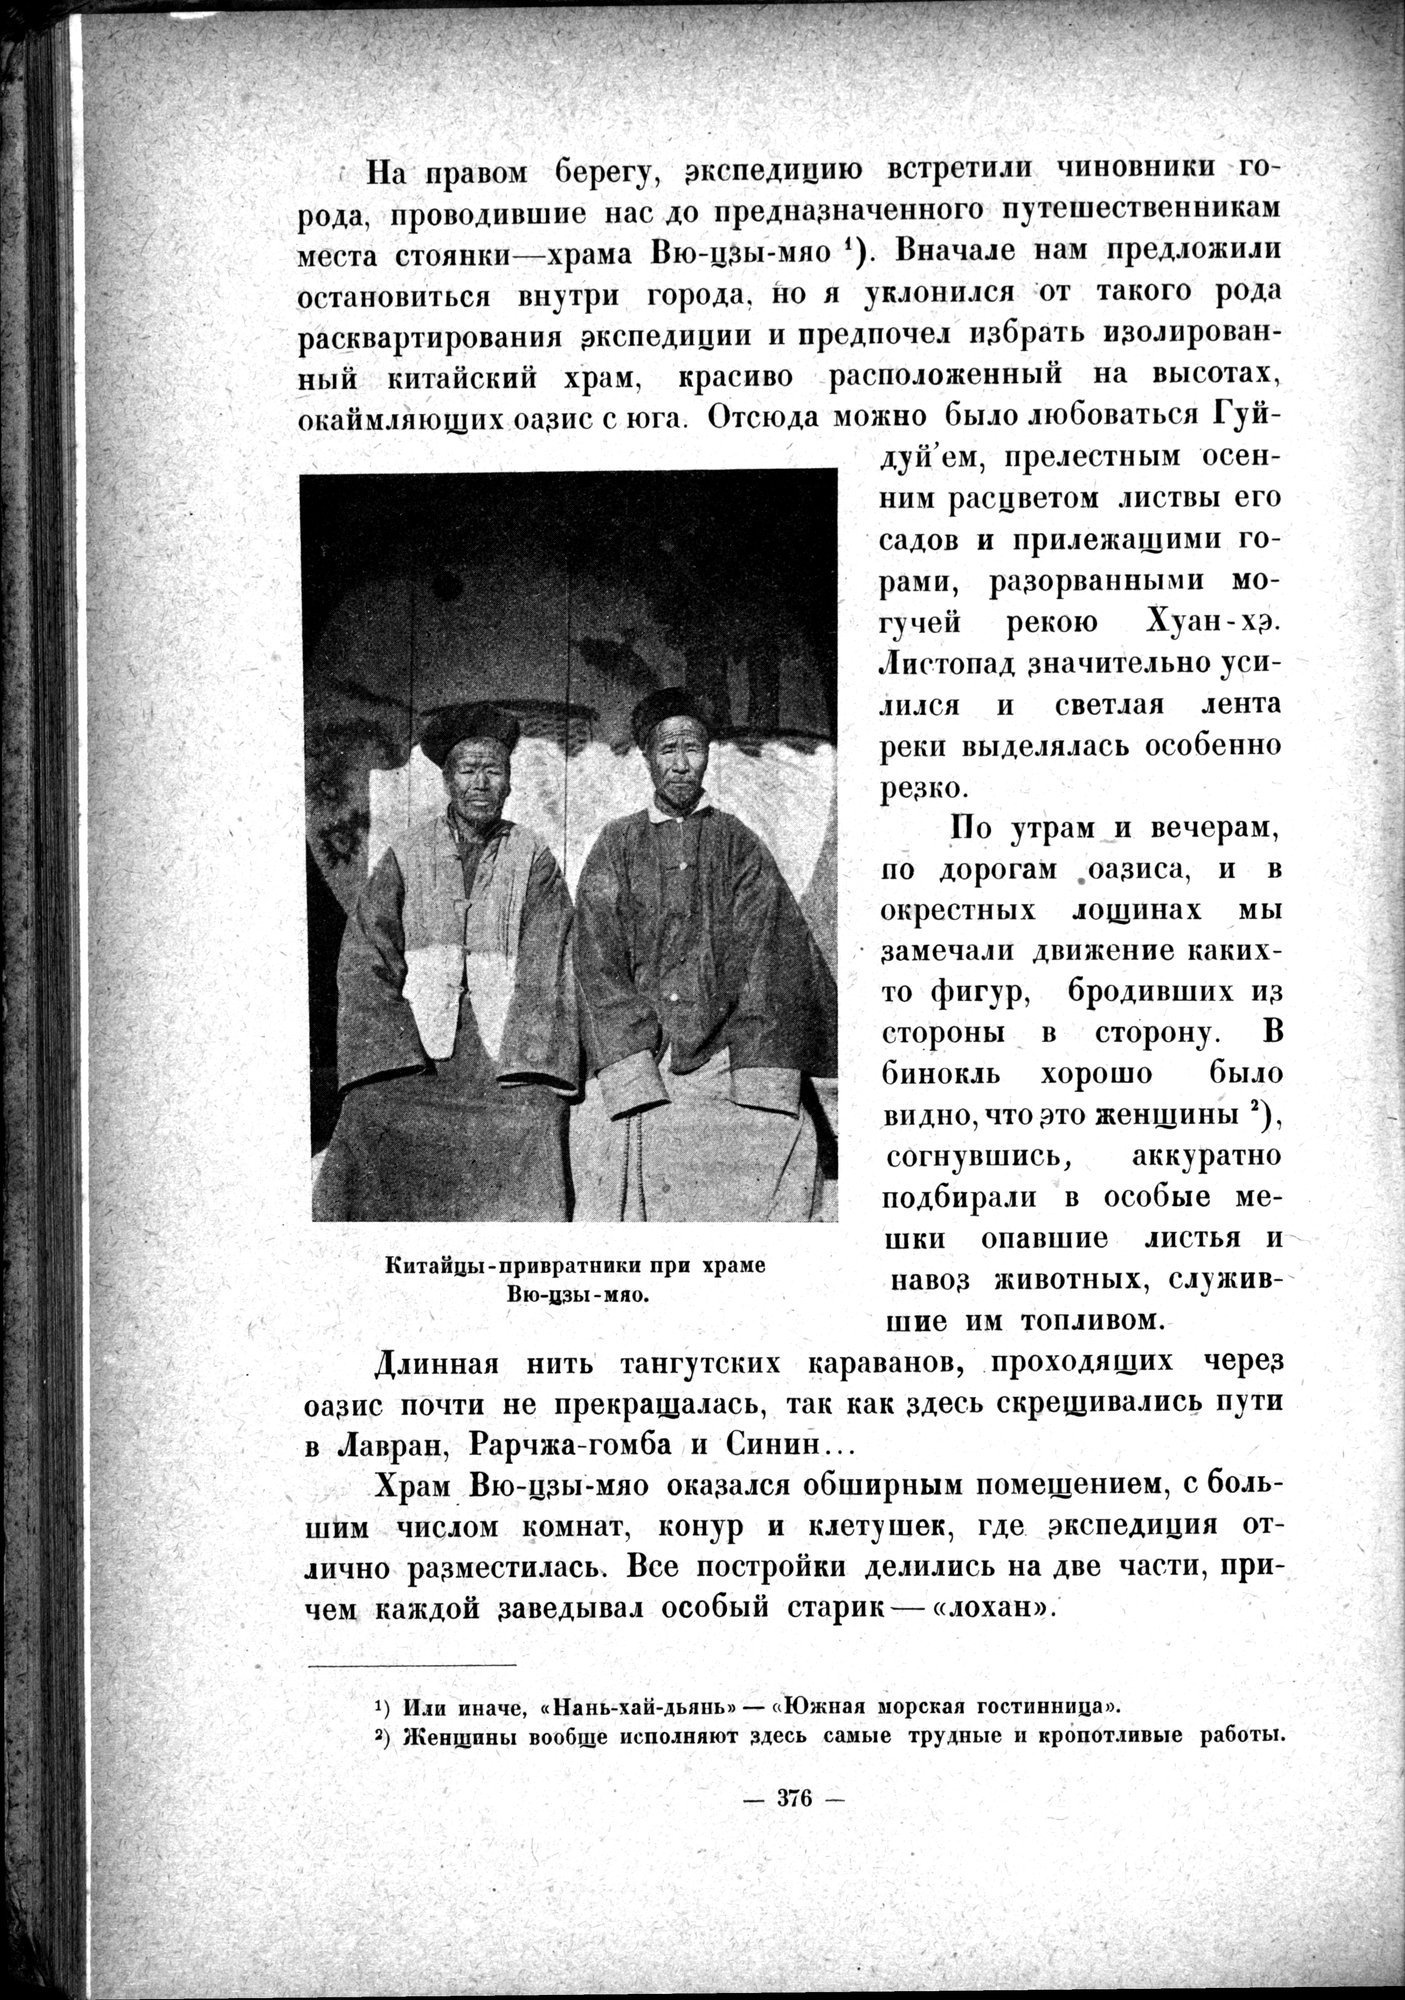 Mongoliya i Amdo i mertby gorod Khara-Khoto : vol.1 / Page 428 (Grayscale High Resolution Image)